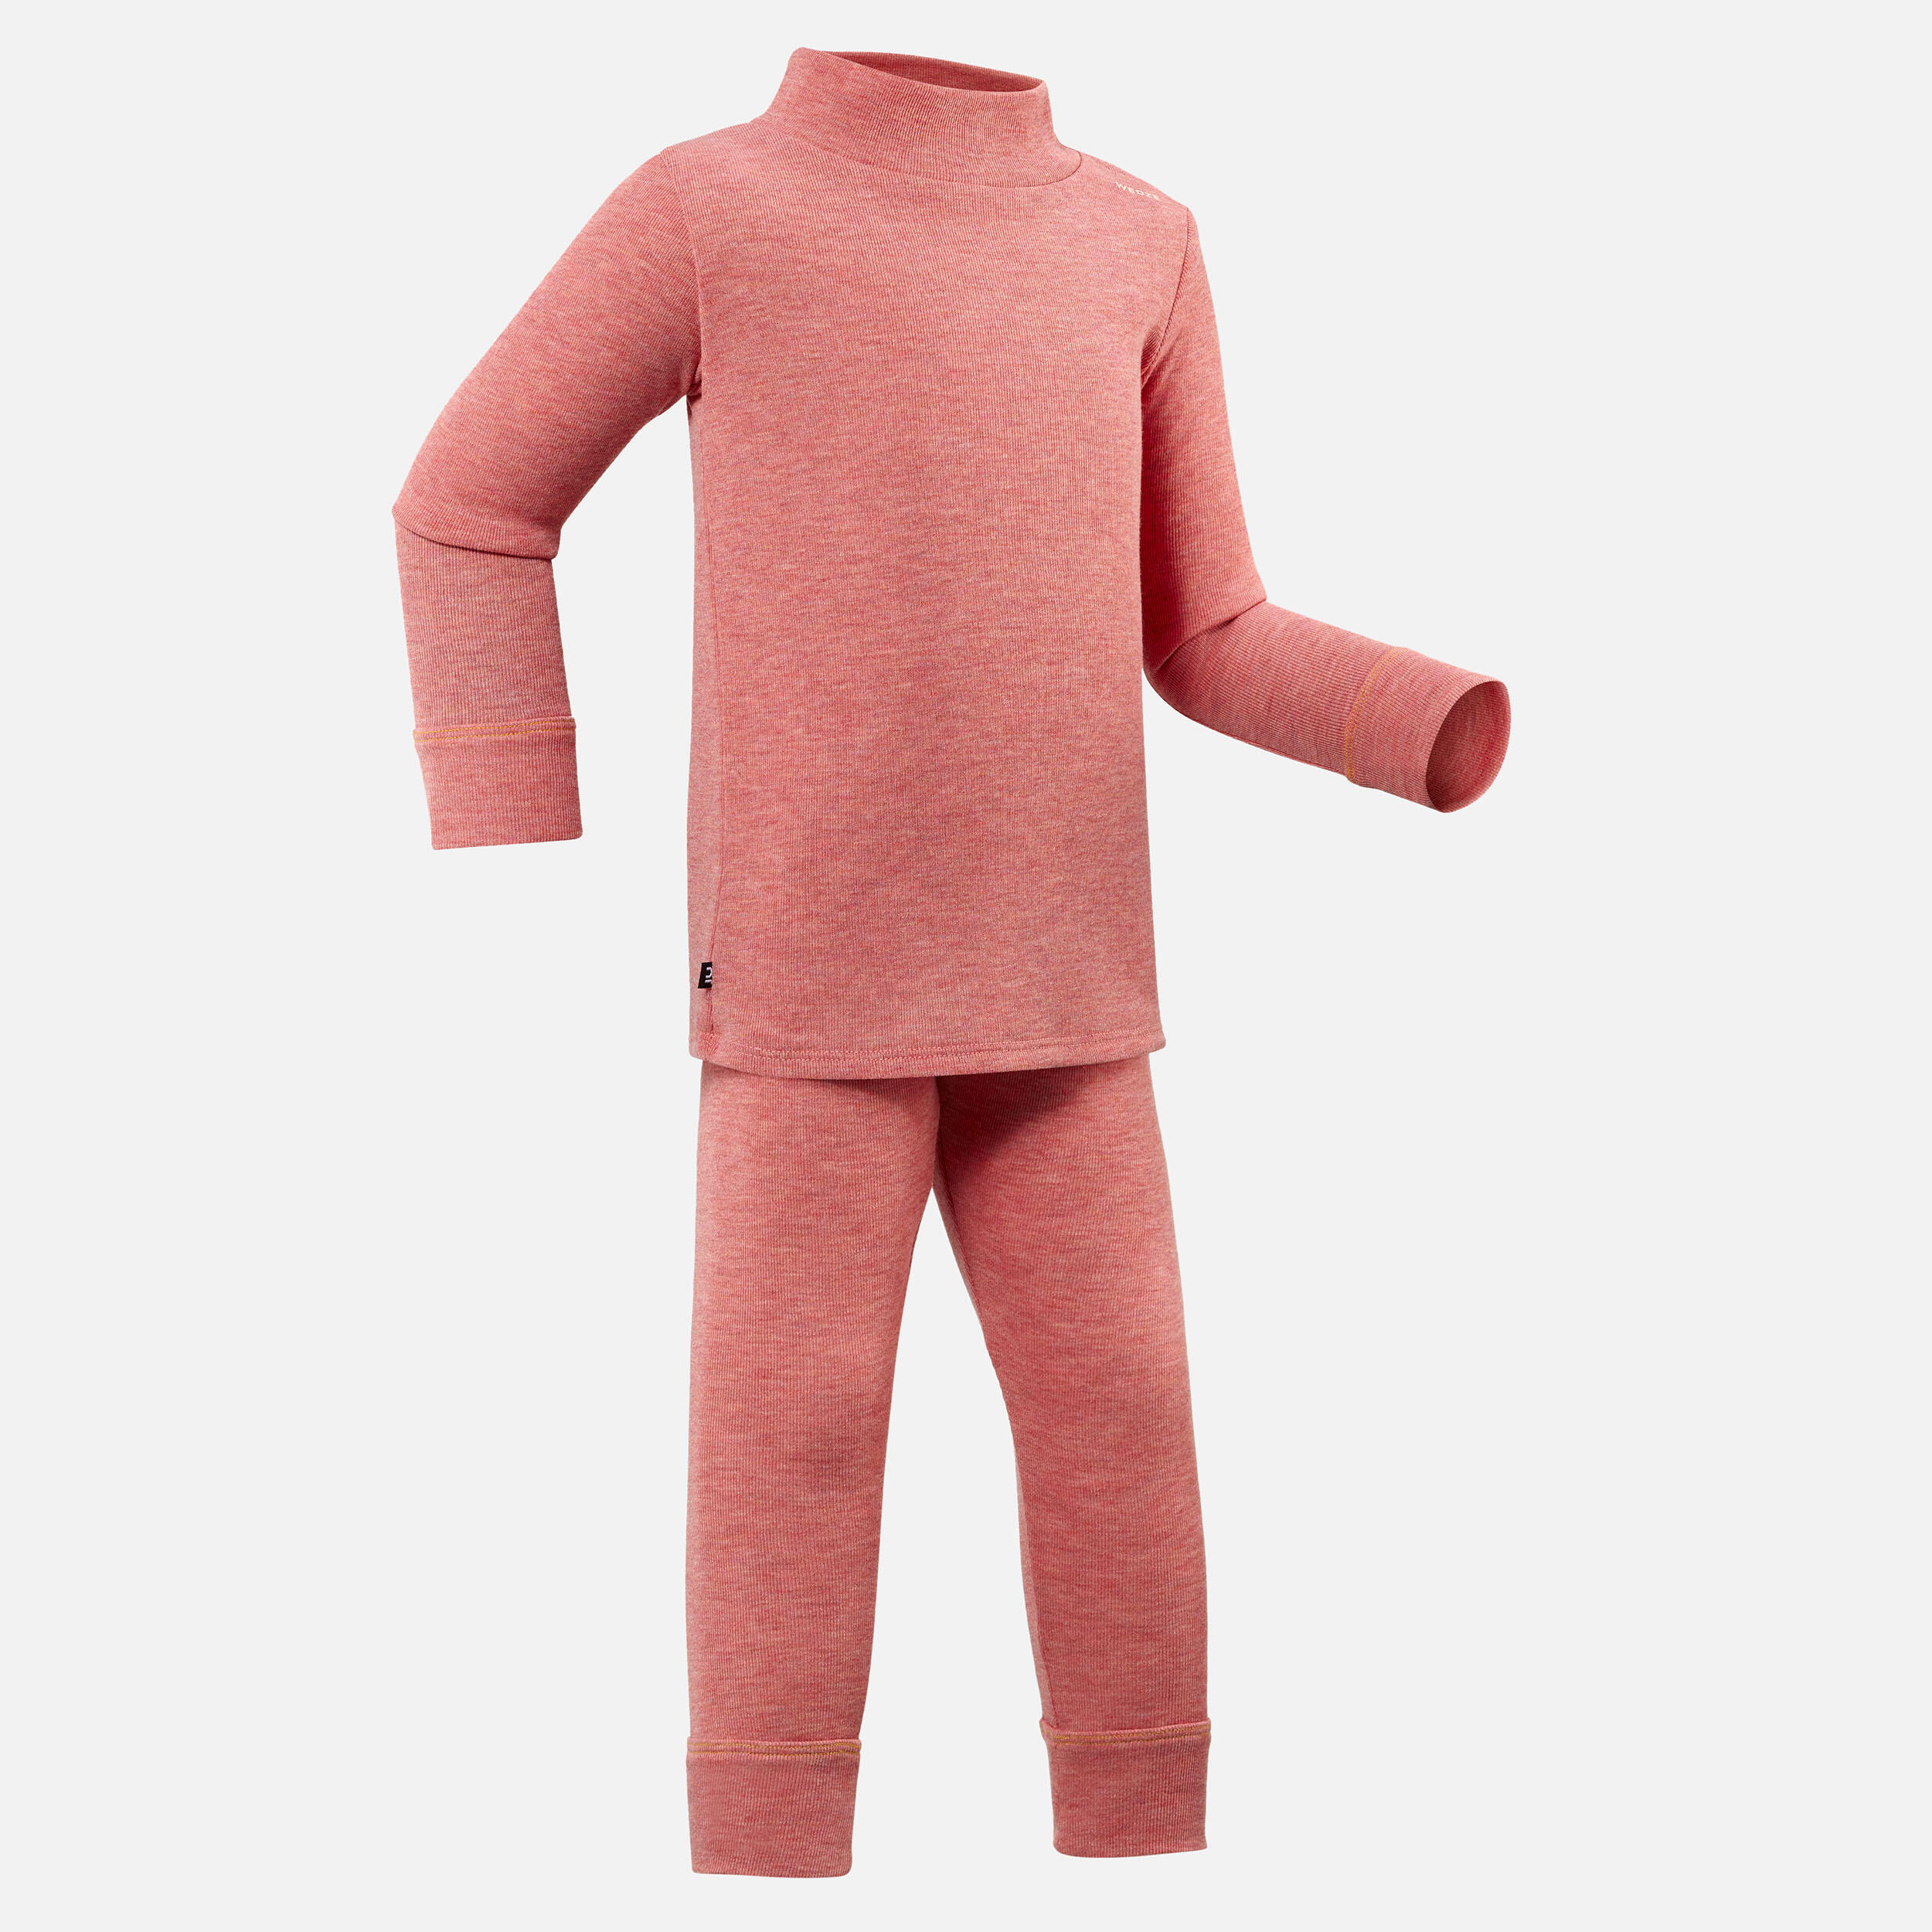 Base layer trousers, Baby ski leggings - WARM pink 7/7